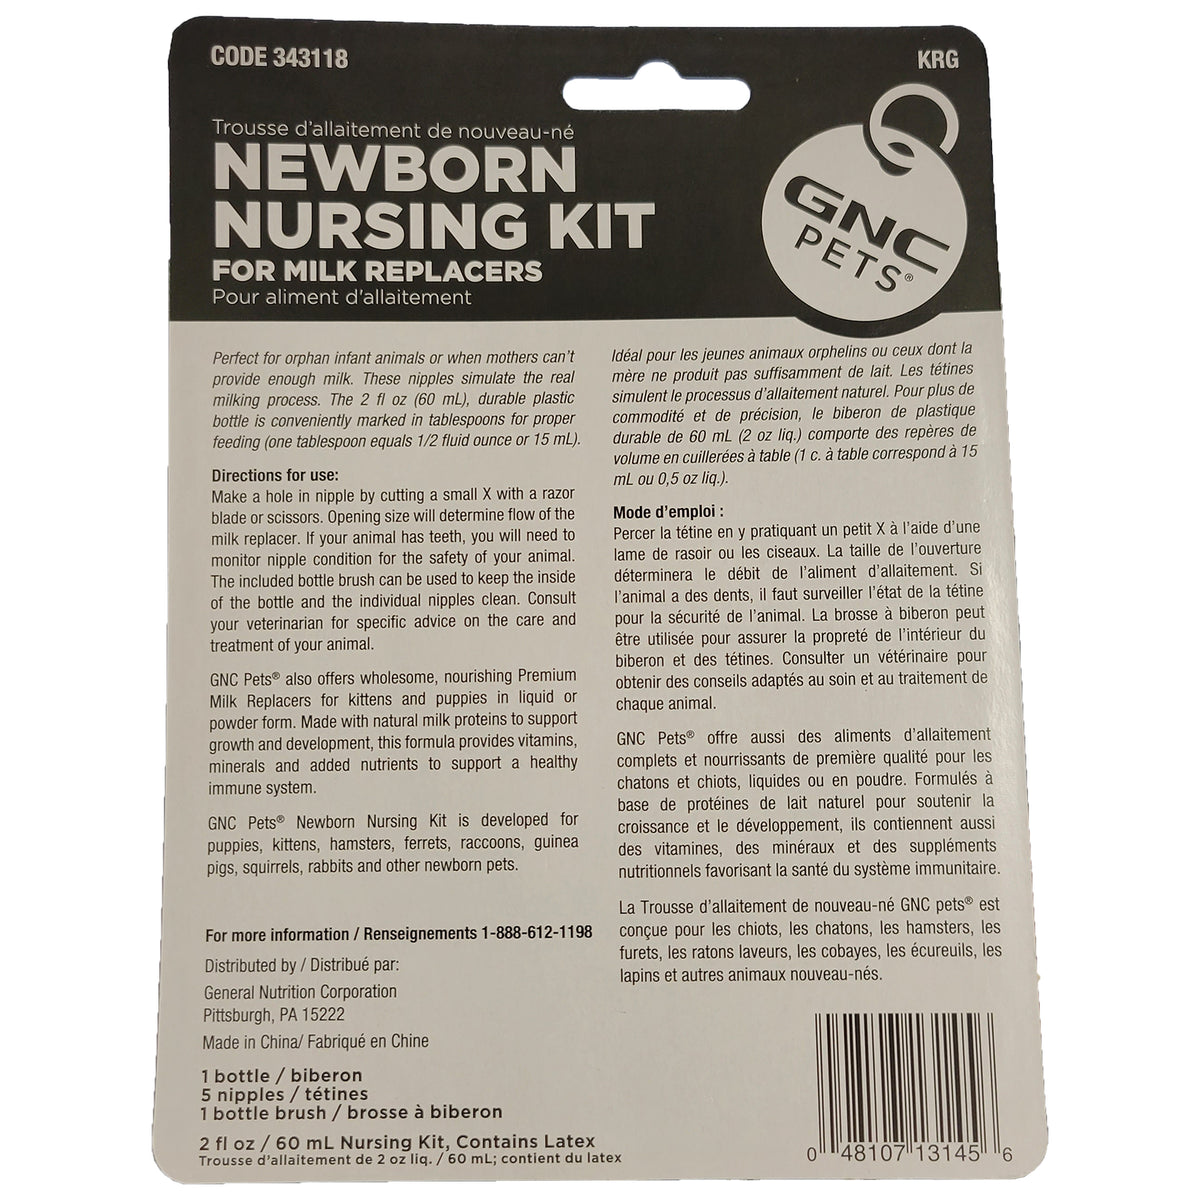 GNC Pets Newborn Nursing Kit for Puppy & Kitten Milk Replacers, 10 Pack